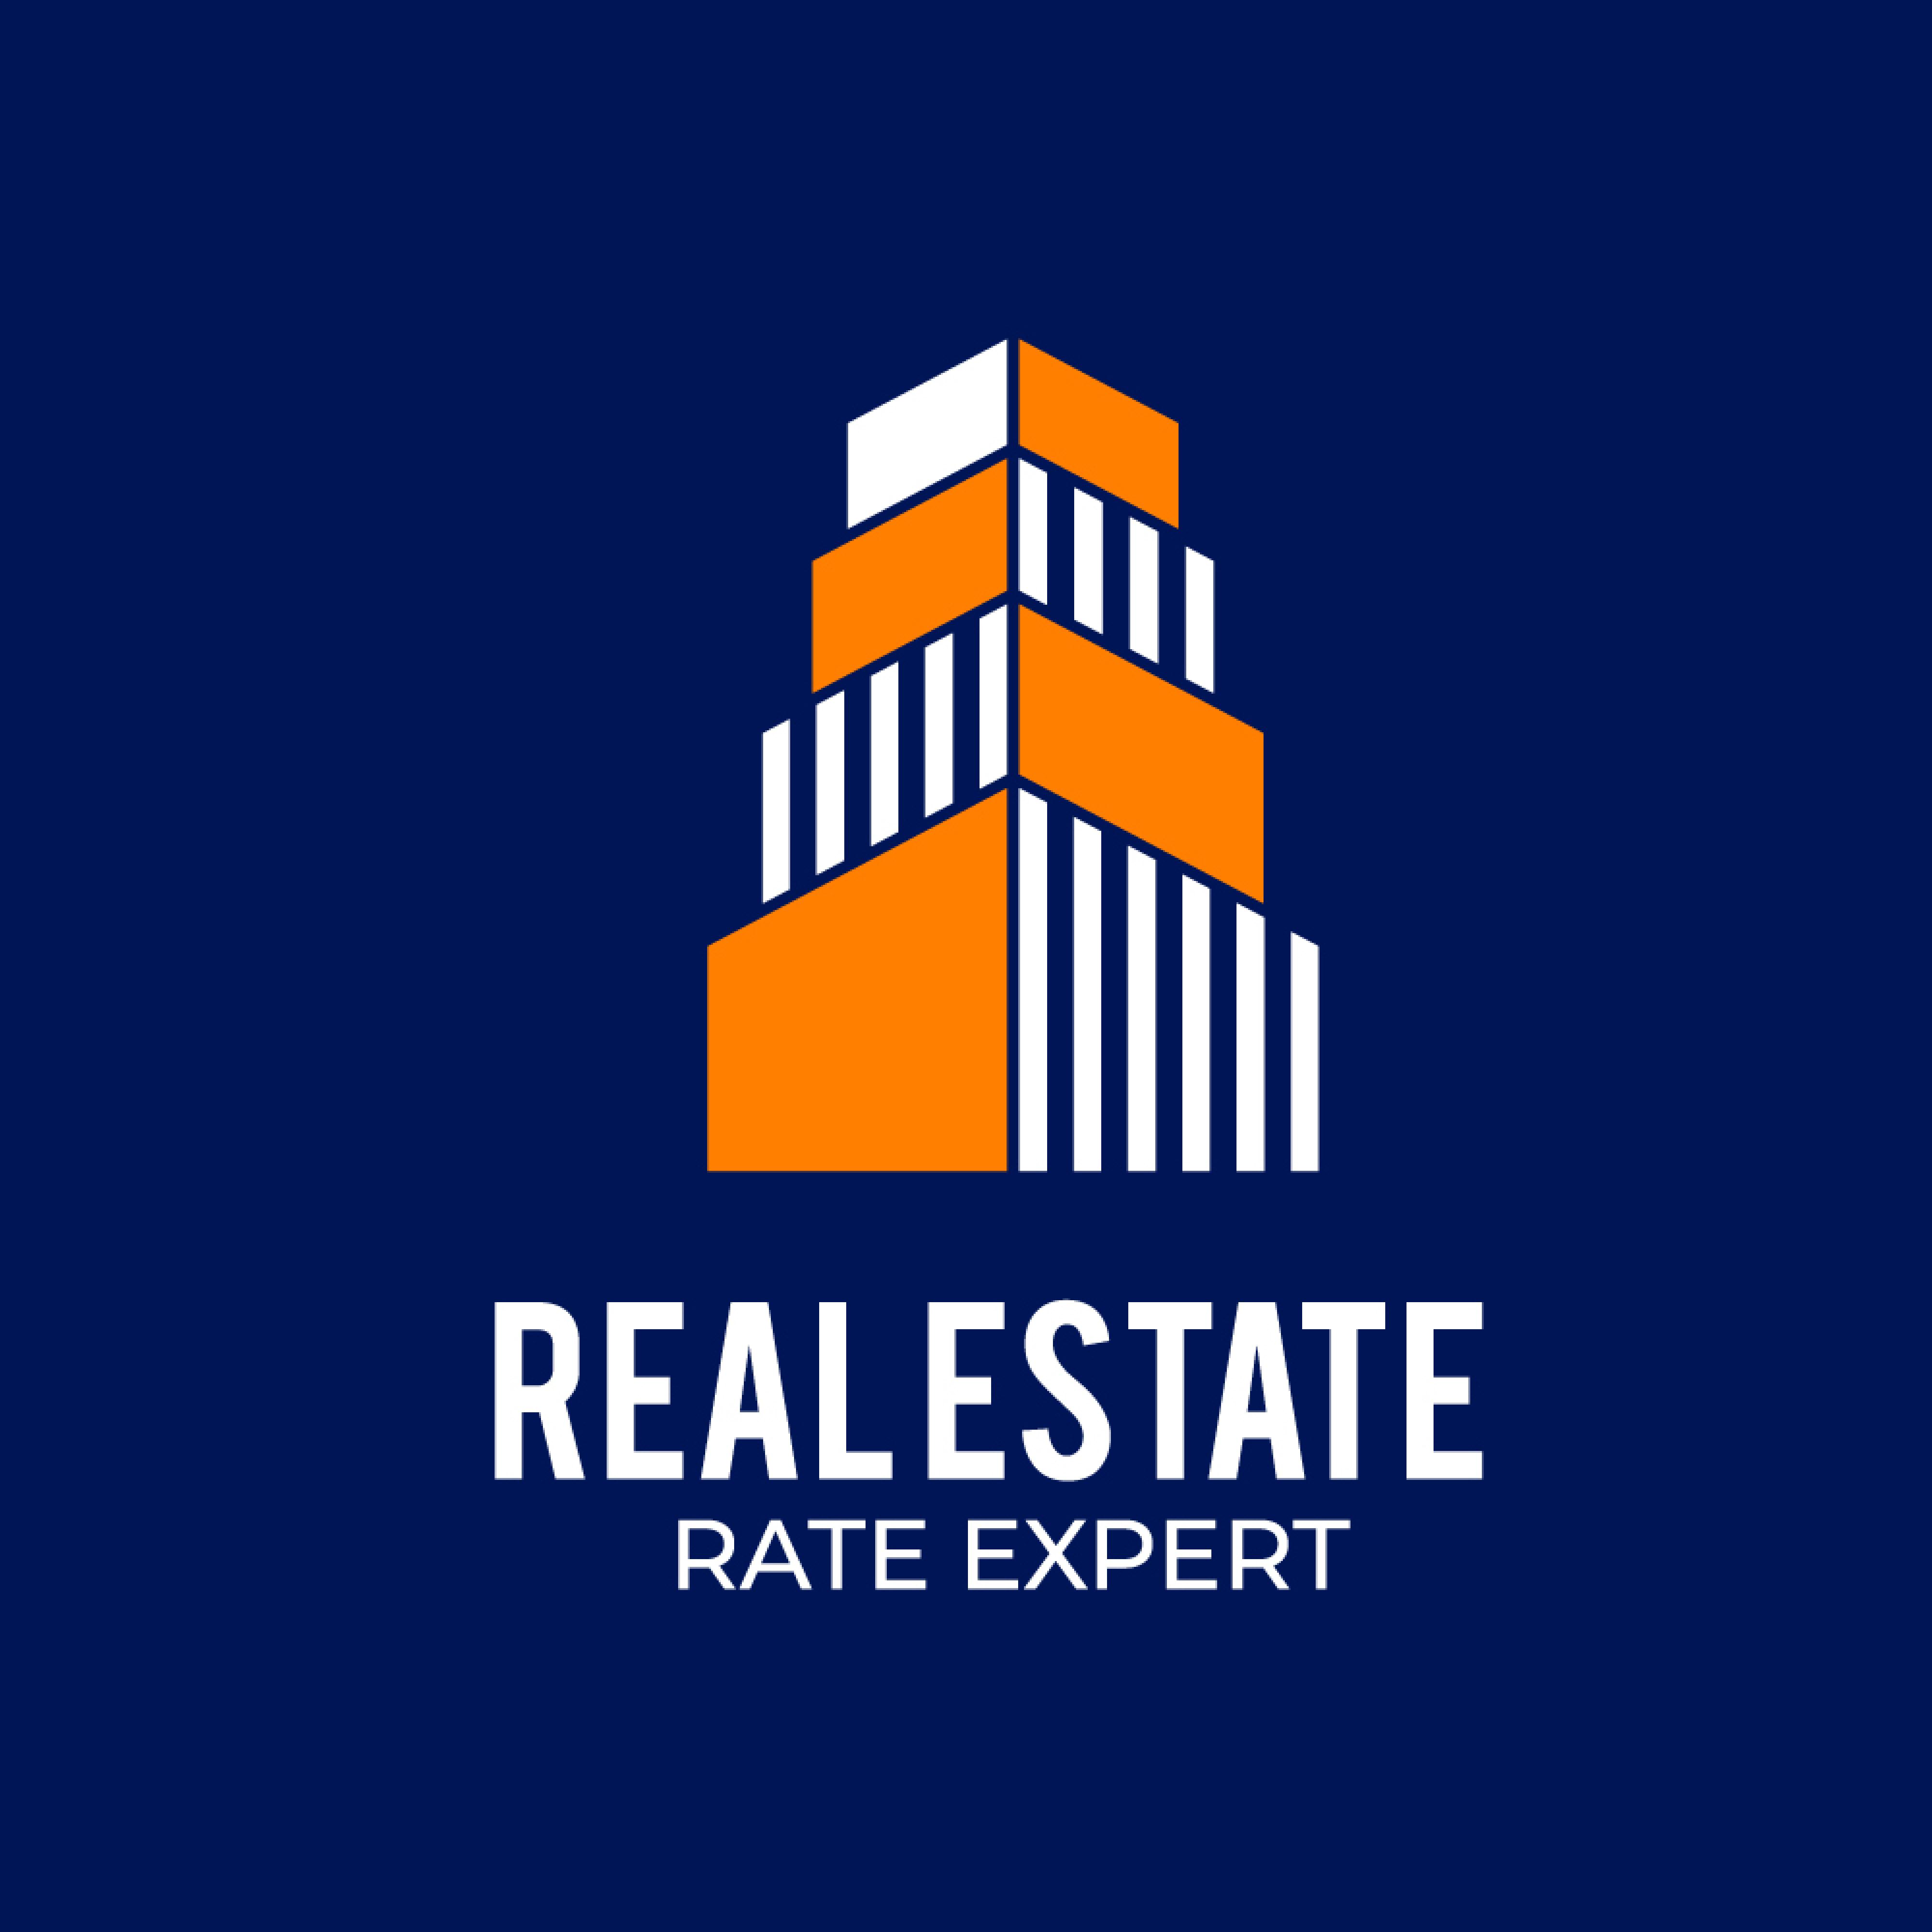 Real estate logo design with building vector